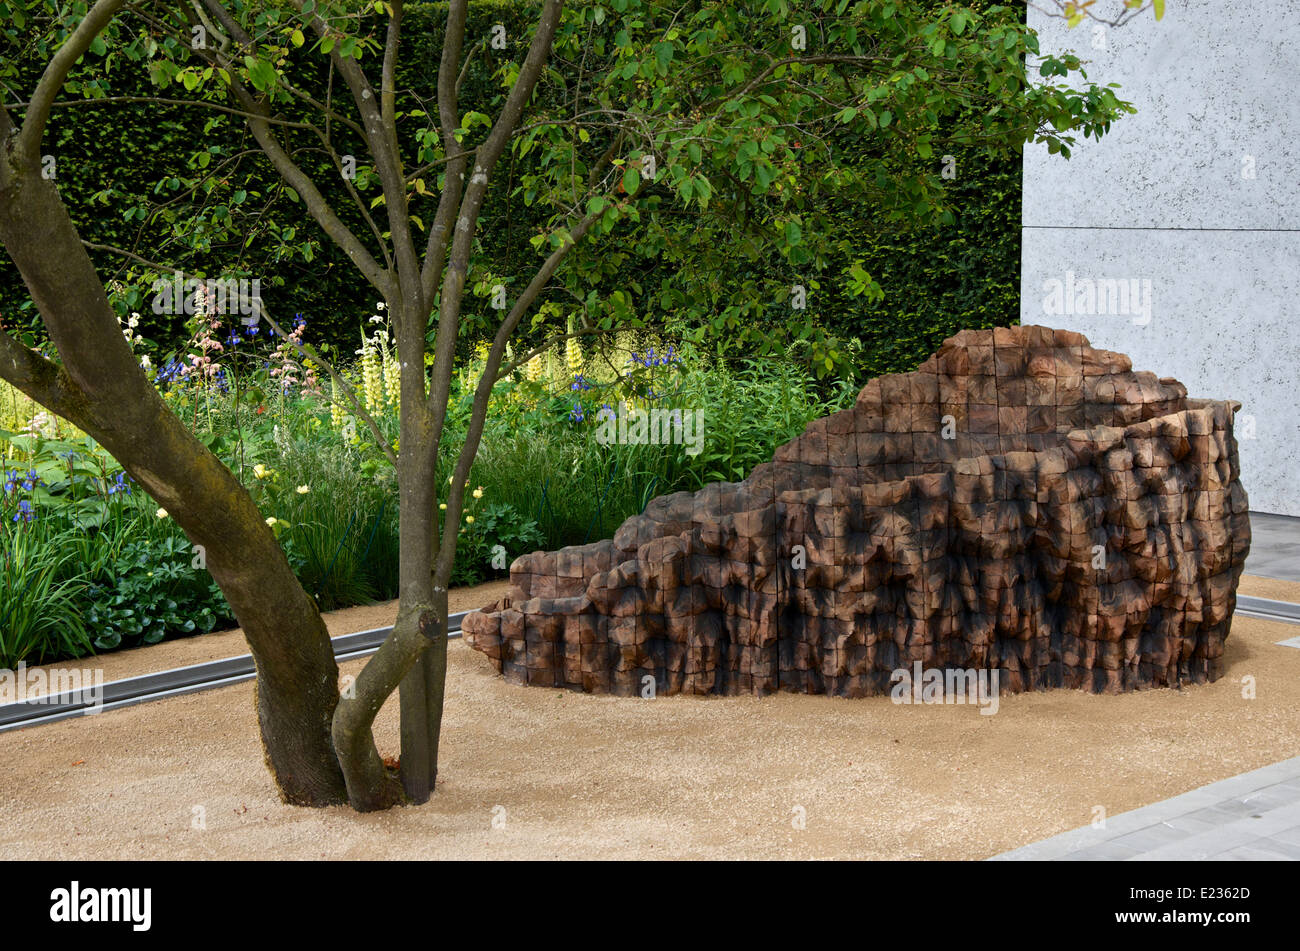 Fascio di cedro per artista Ursula von Rydingsvard nel giardino Laurent-Perrier ad RHS Chelsea Flower Show 2014. Foto Stock